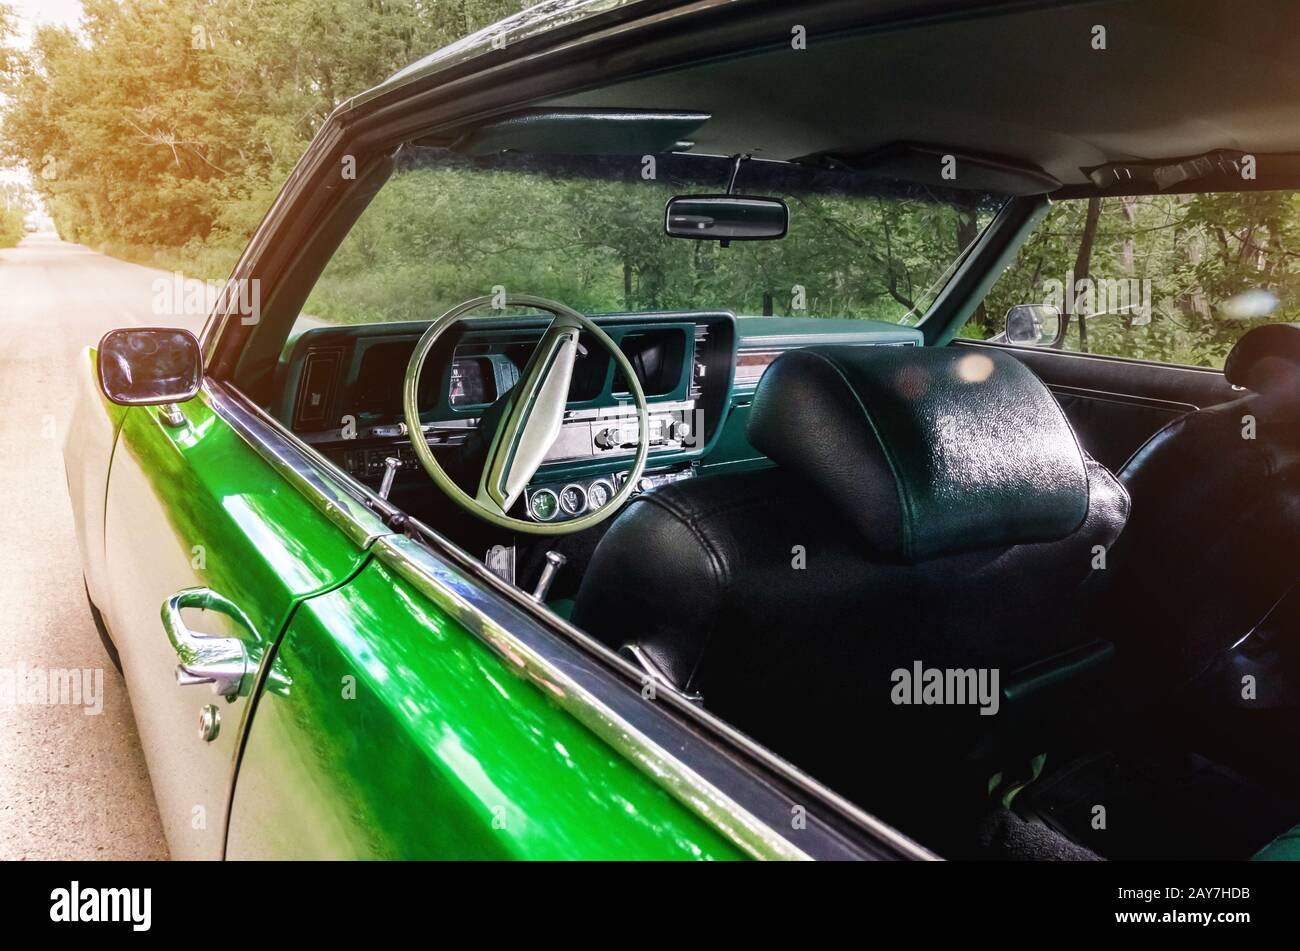 Old vintage green car vehicle interior Stock Photo